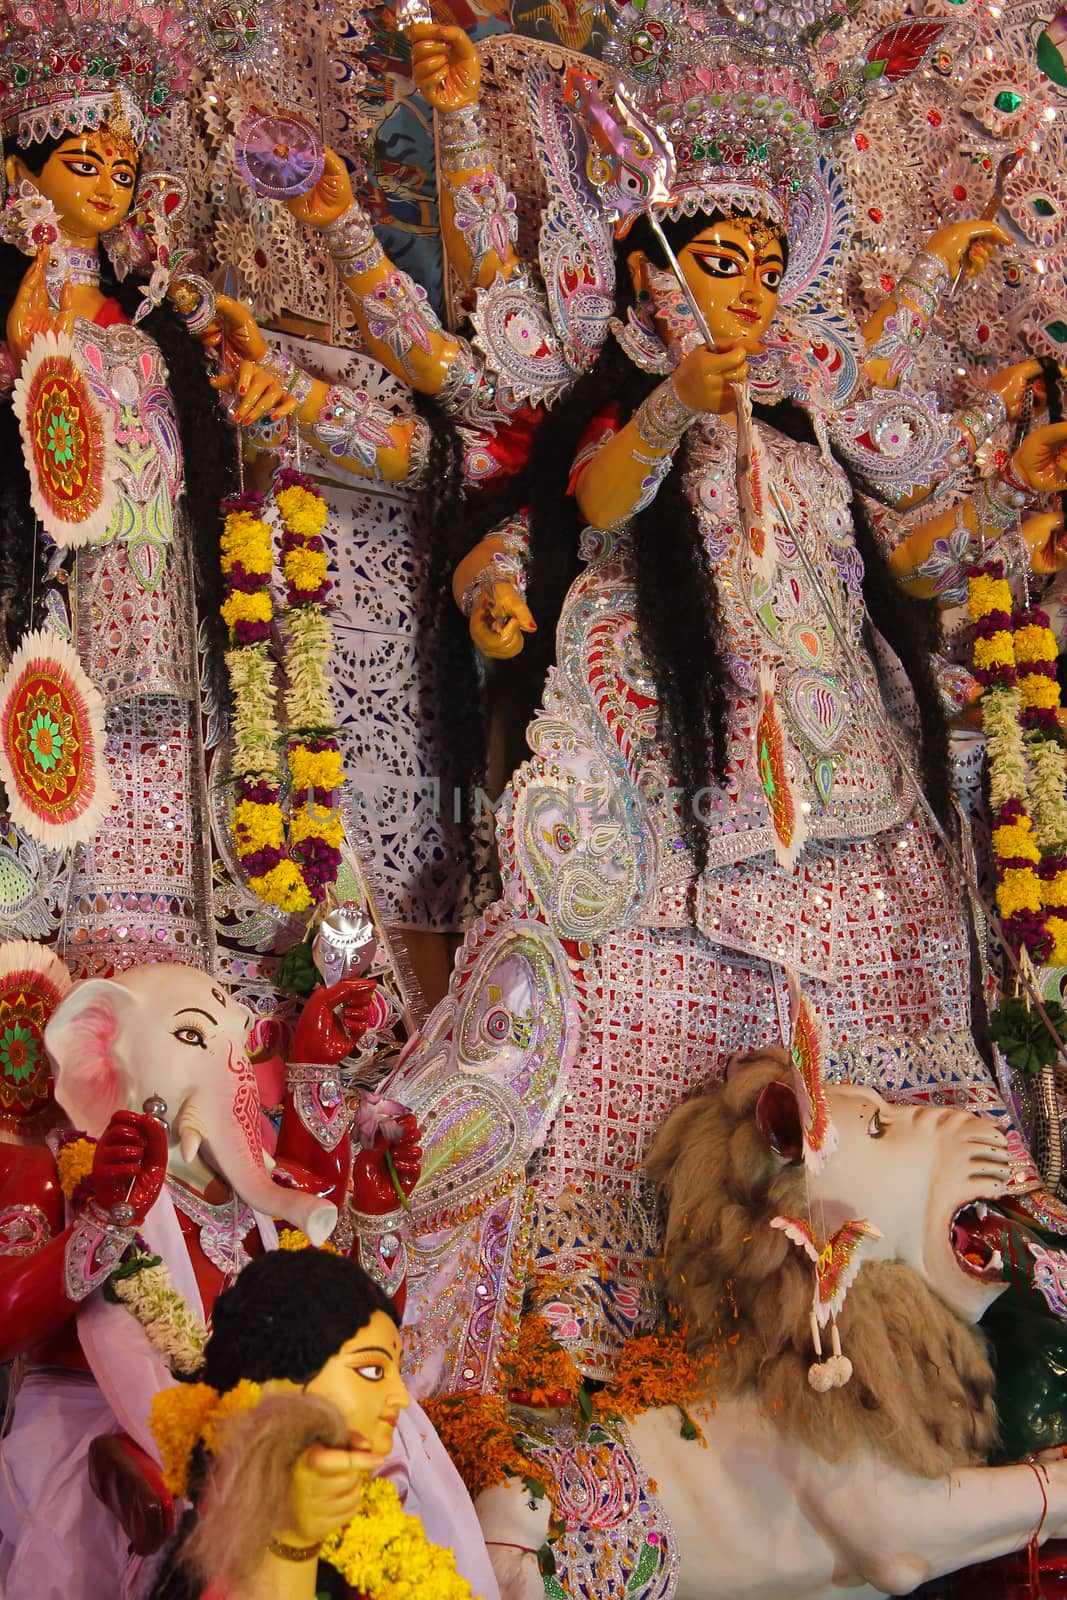 Statue of goddess durga along with Lord Ganesha and Saraswati, decorated during navratri pooja